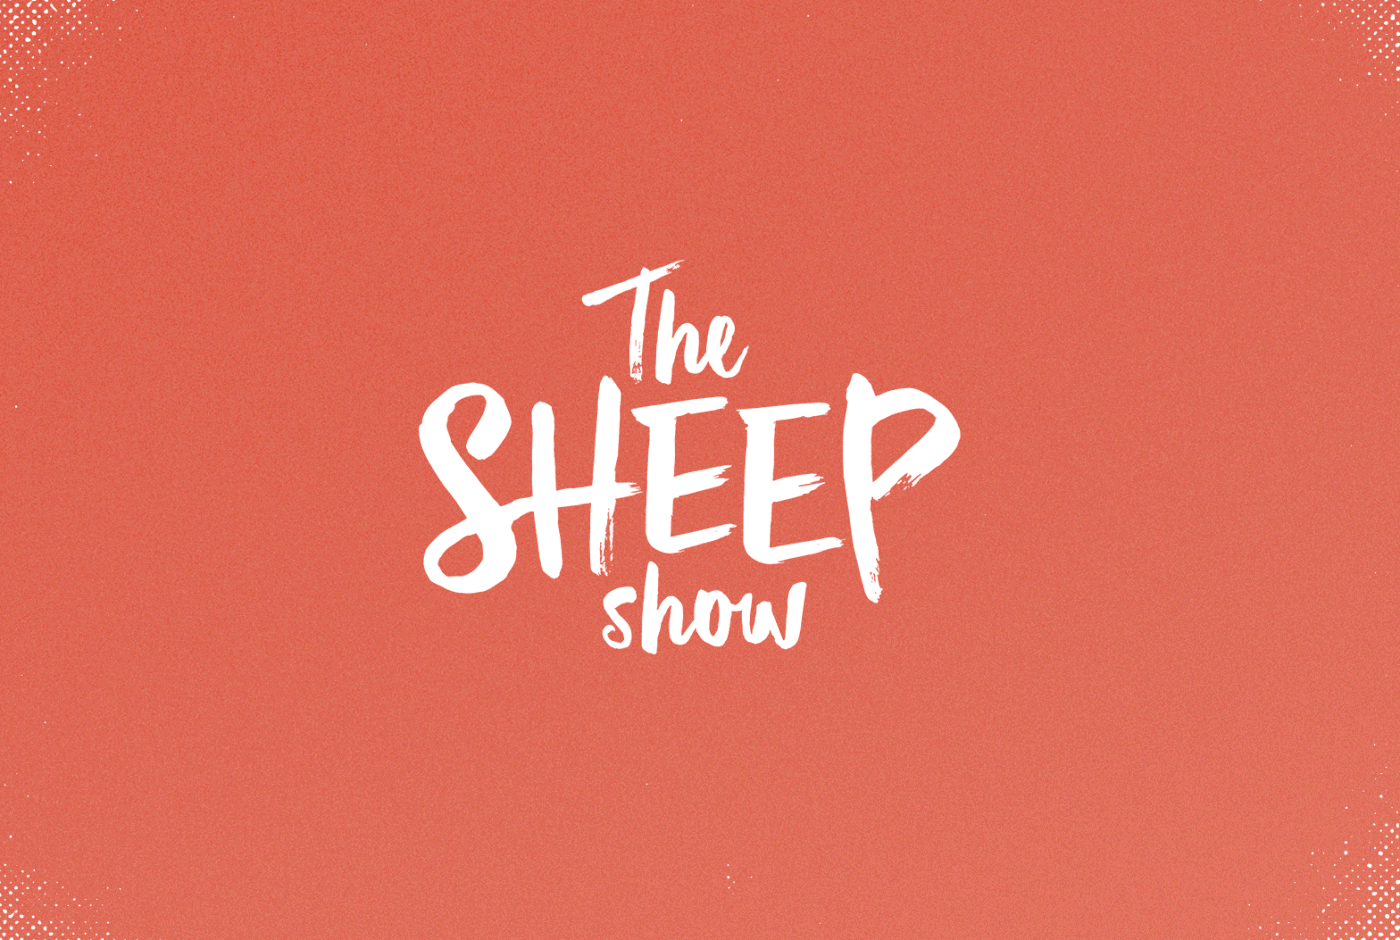 sheep Show art poster Event kansas city brainwash Hypnosis Propaganda texture